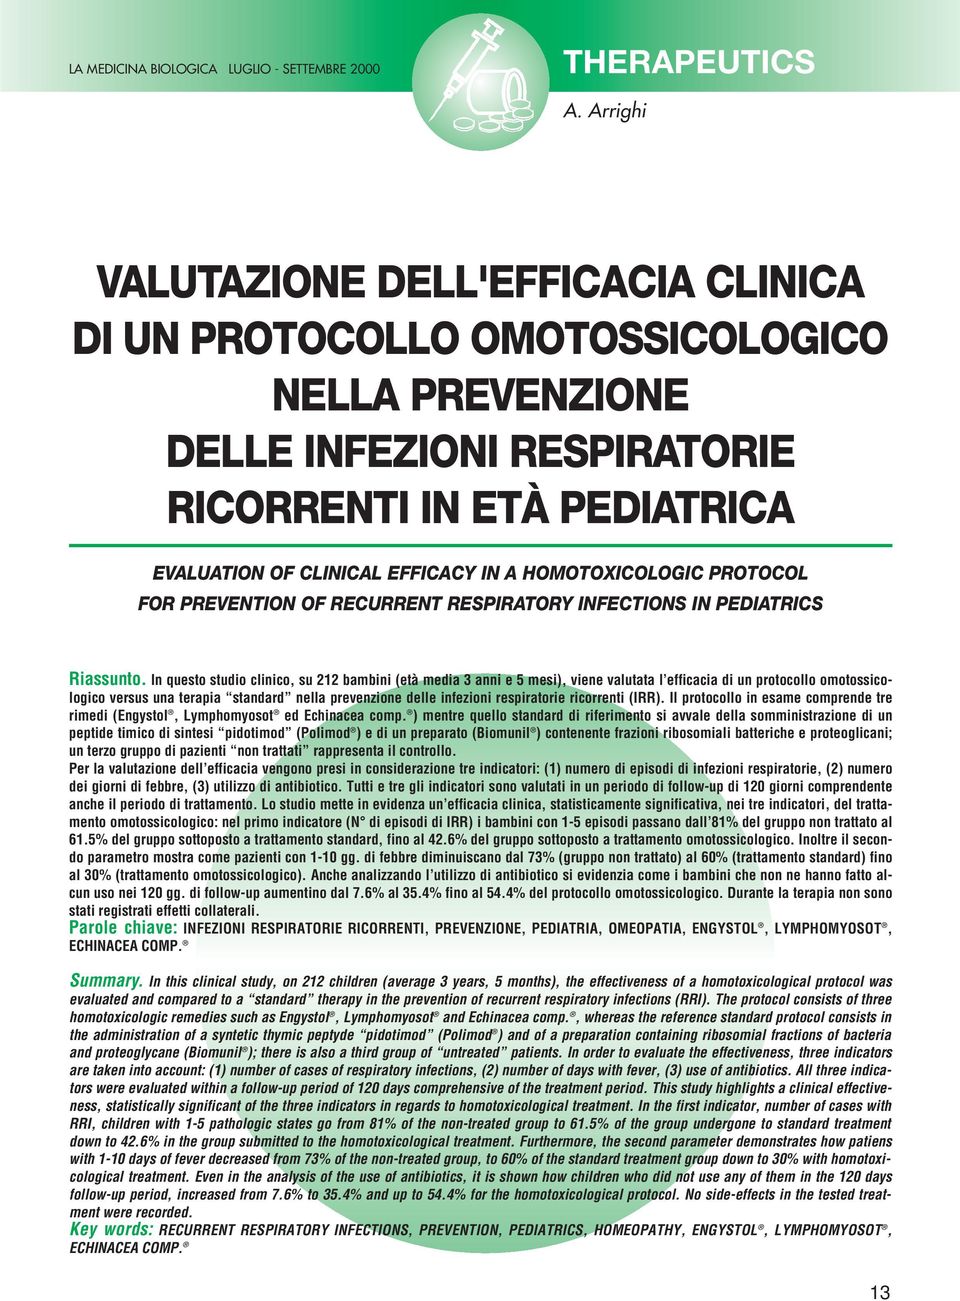 HOMOTOXICOLOGIC PROTOCOL FOR PREVENTION OF RECURRENT RESPIRATORY INFECTIONS IN PEDIATRICS Riassunto.